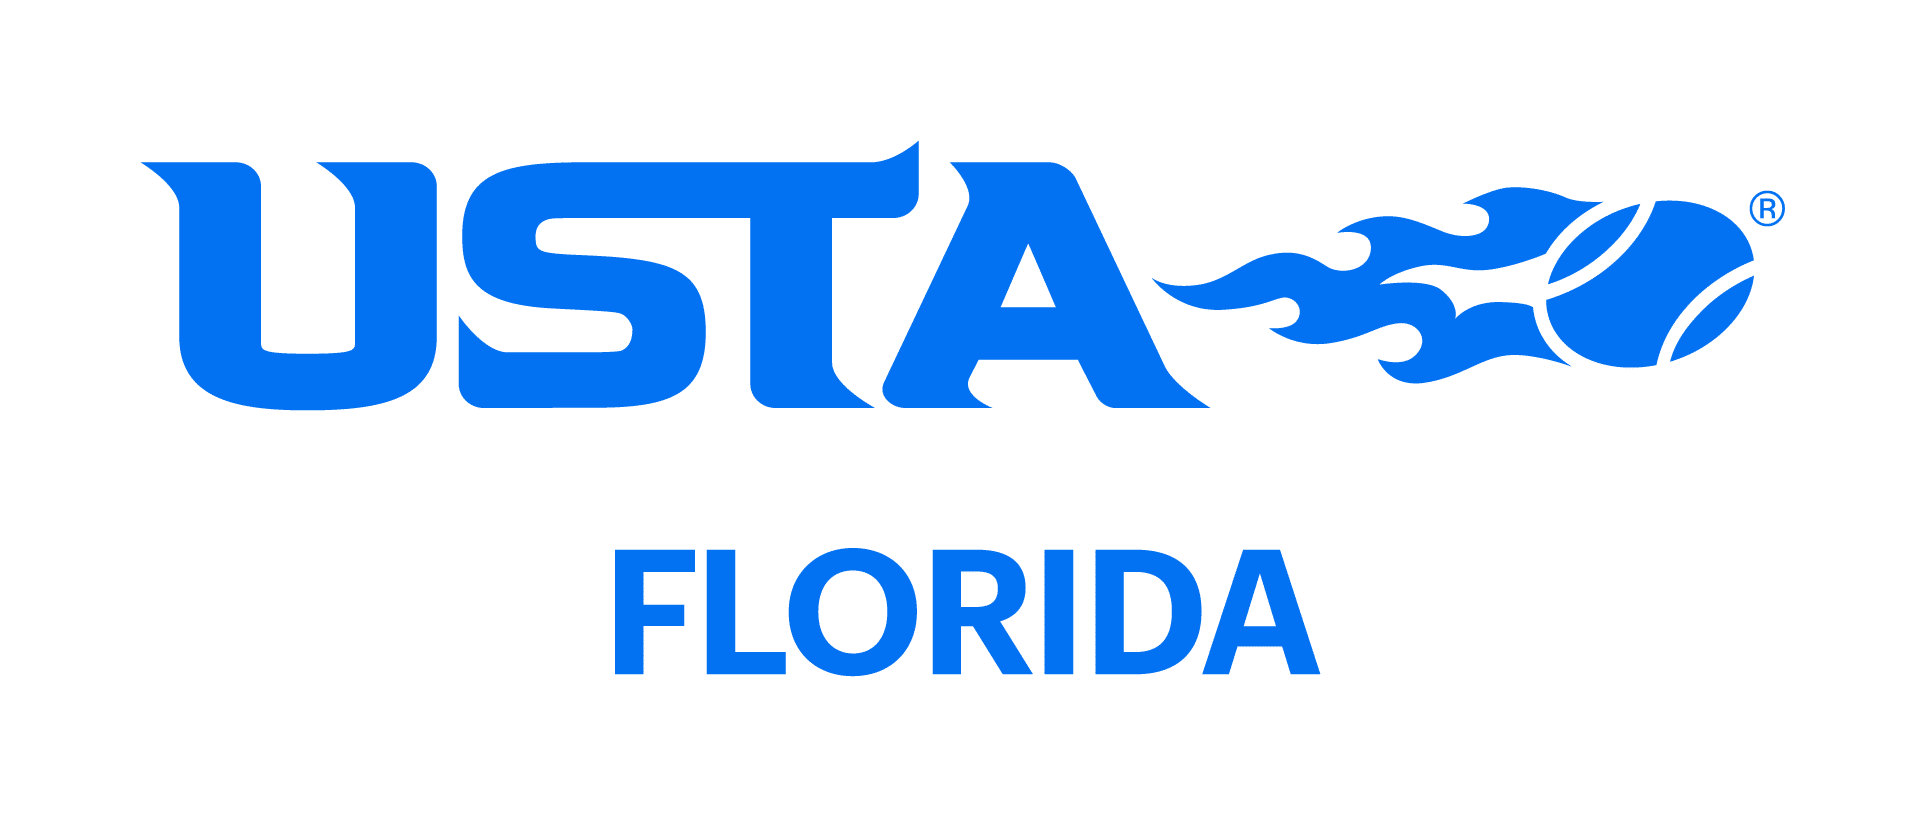 Upcoming Tiebreak Tennis Tournaments in Florida - USTA Florida